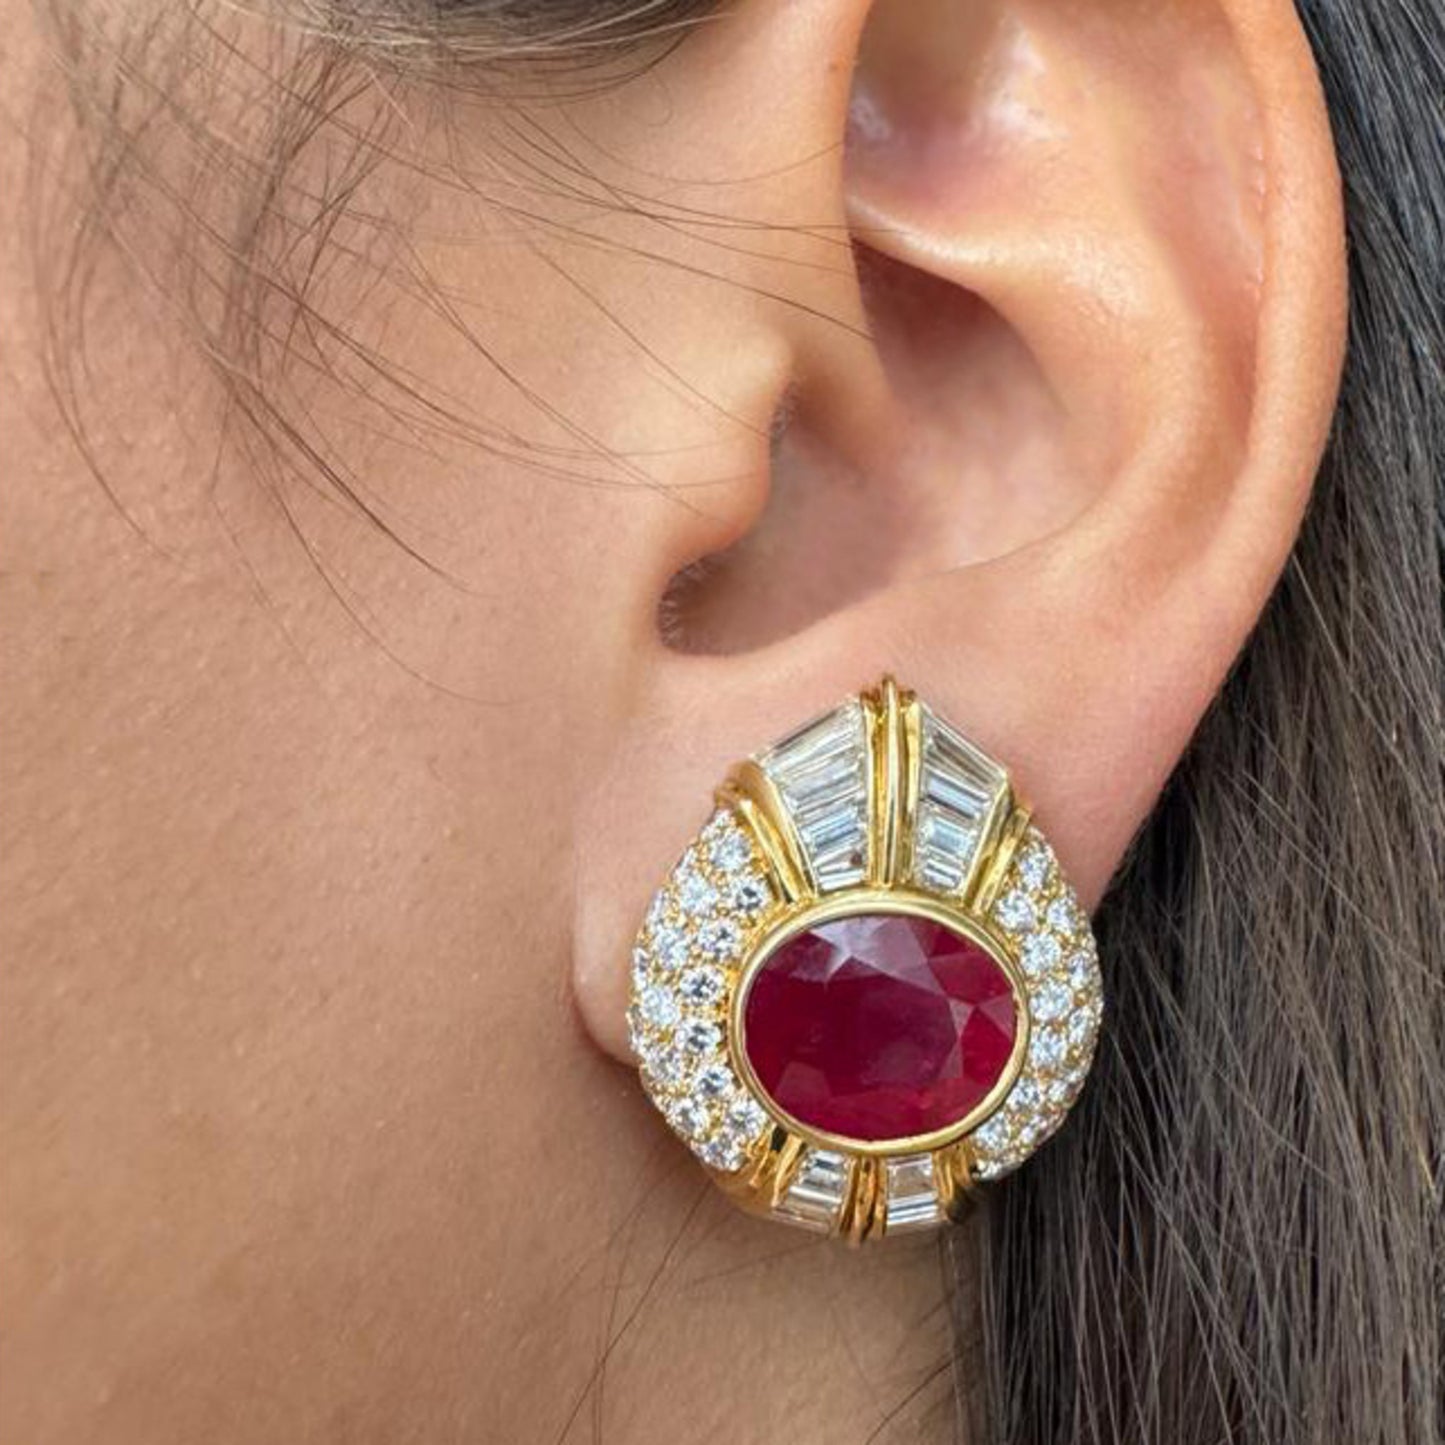 Bulgari 1970s 18KT Yellow Gold Ruby & Diamond Earrings on ear